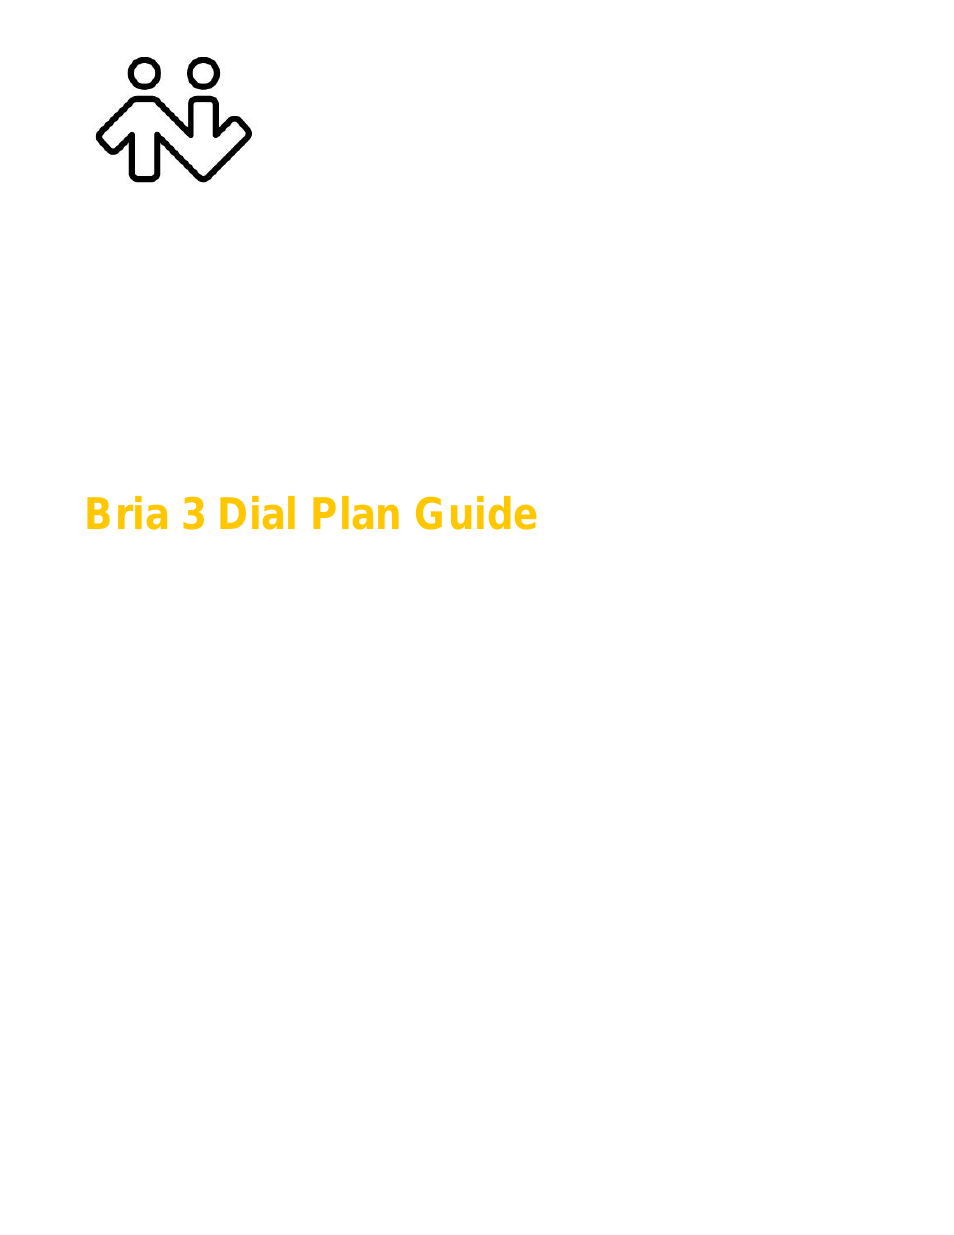 Bria 3 Dial Plan Guide